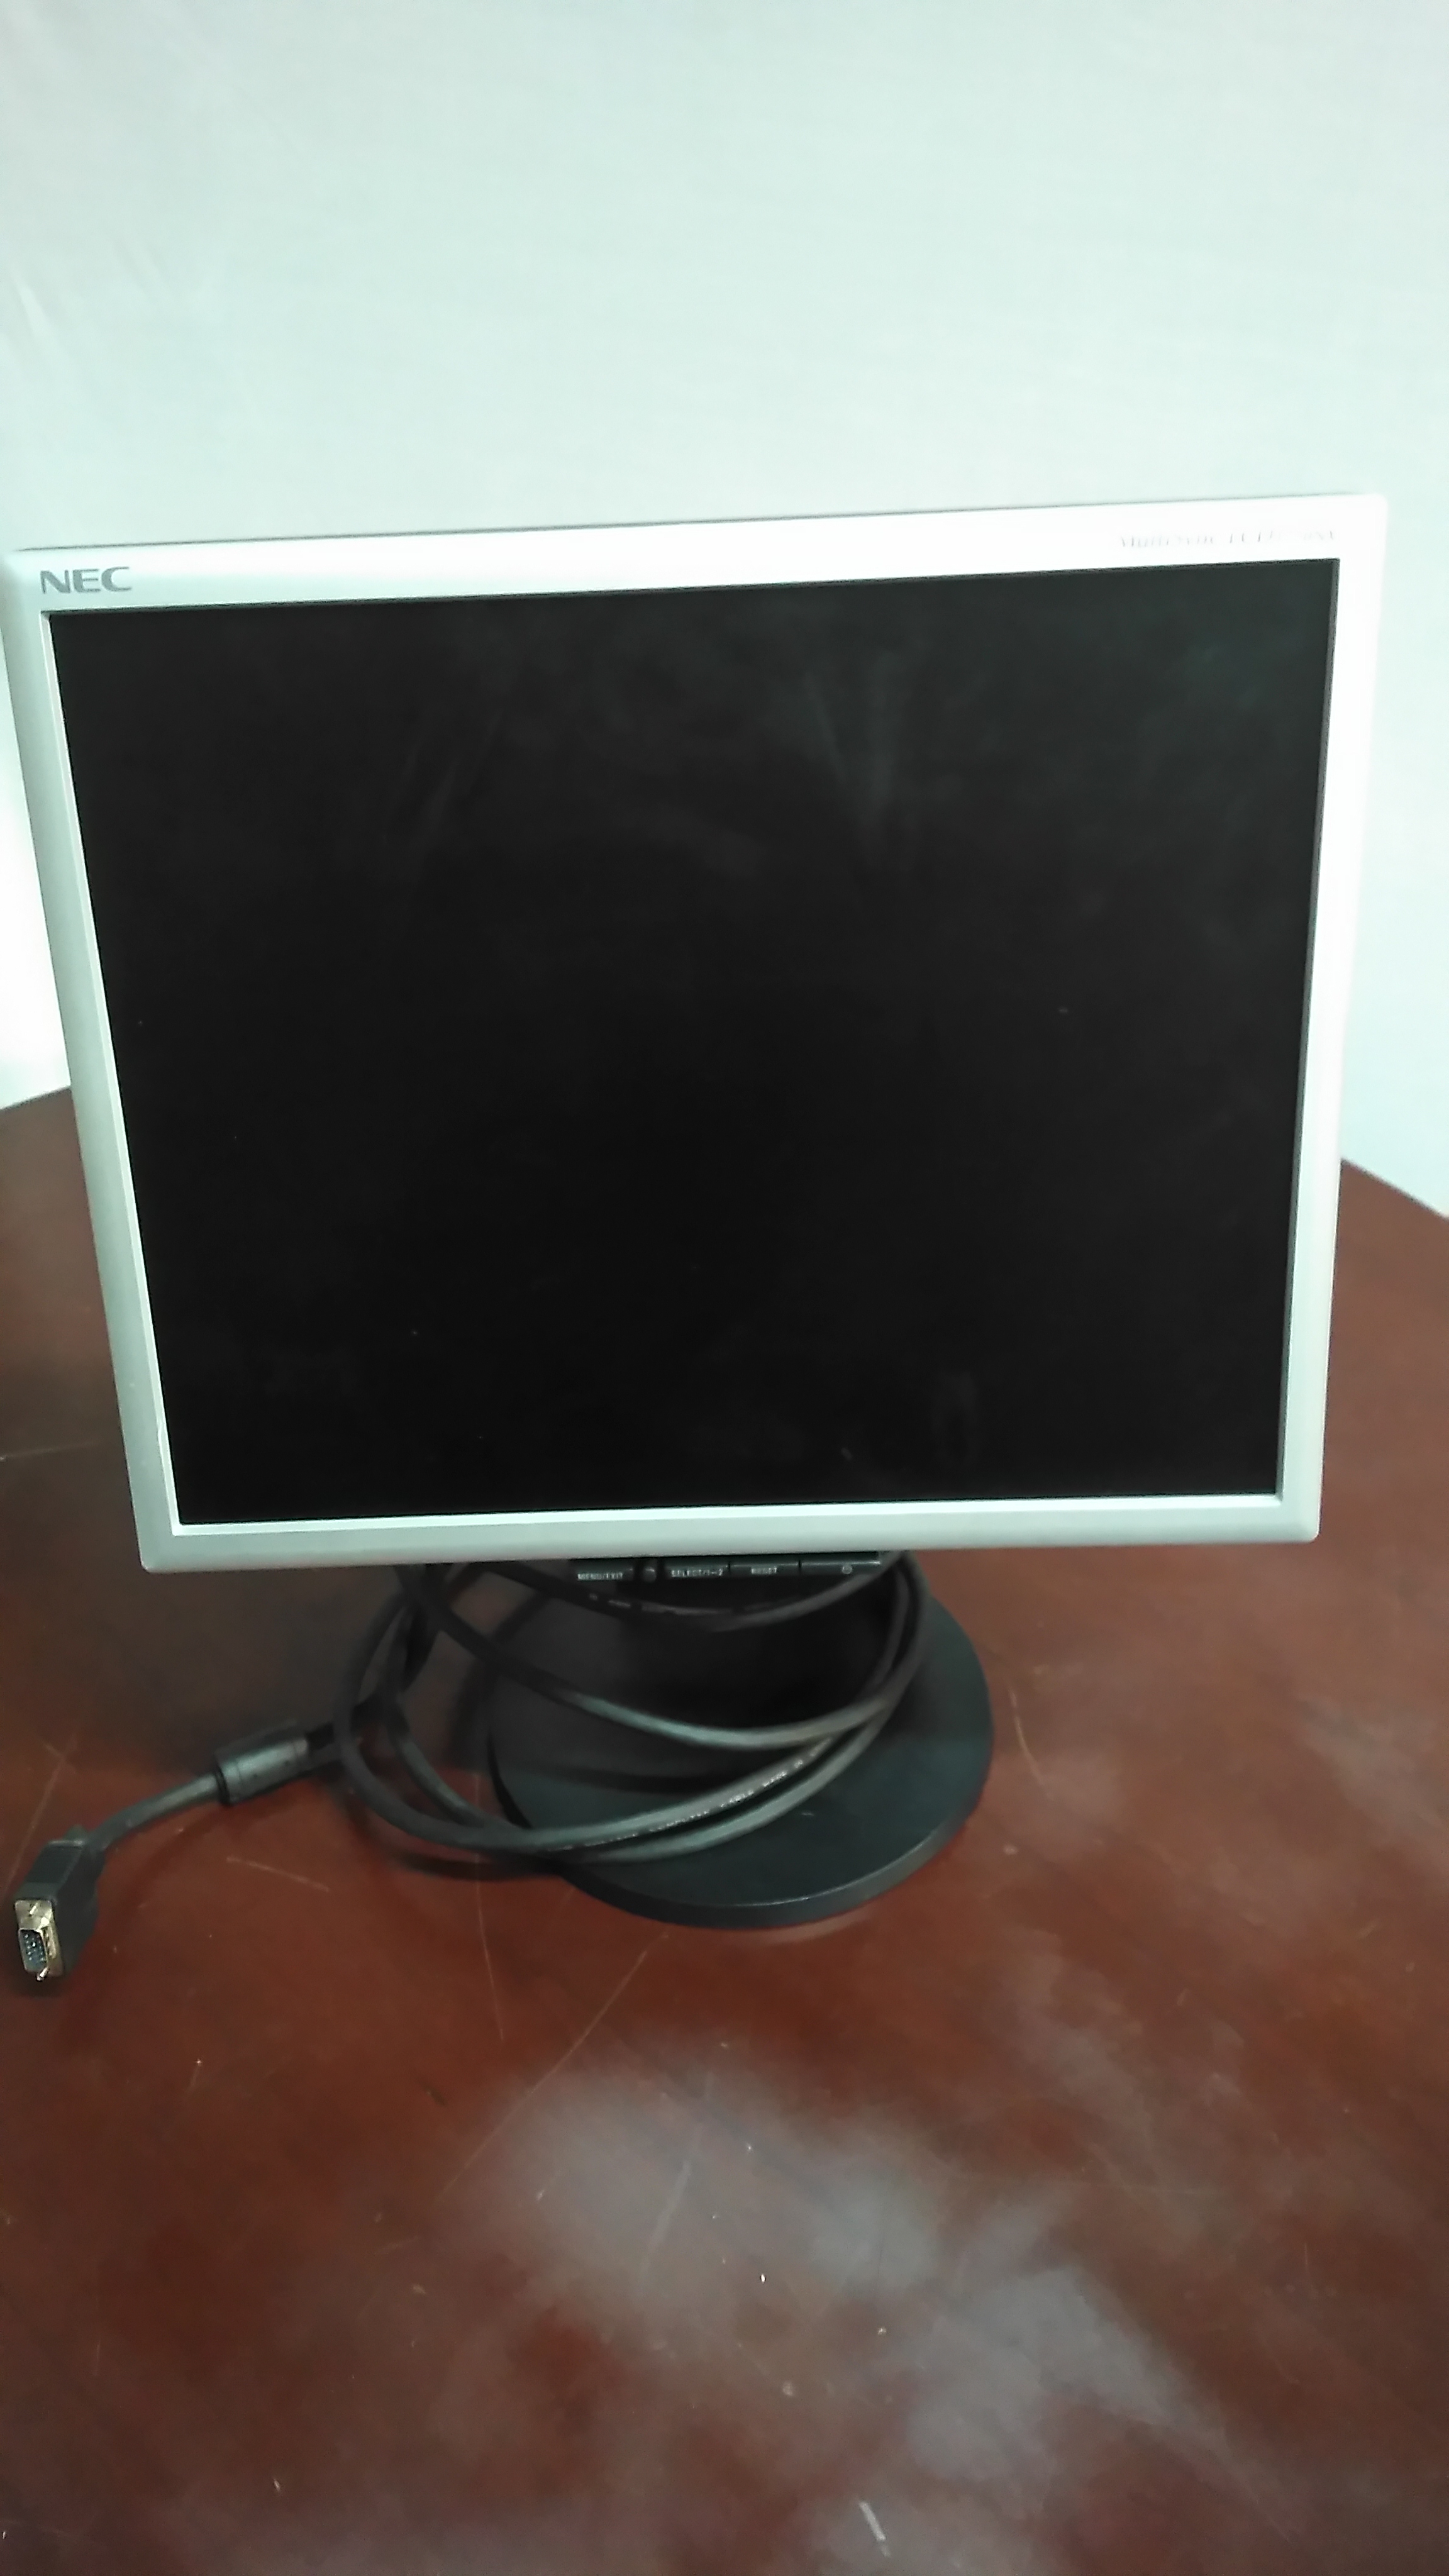 NEC Multisync 17" LCD Monitor